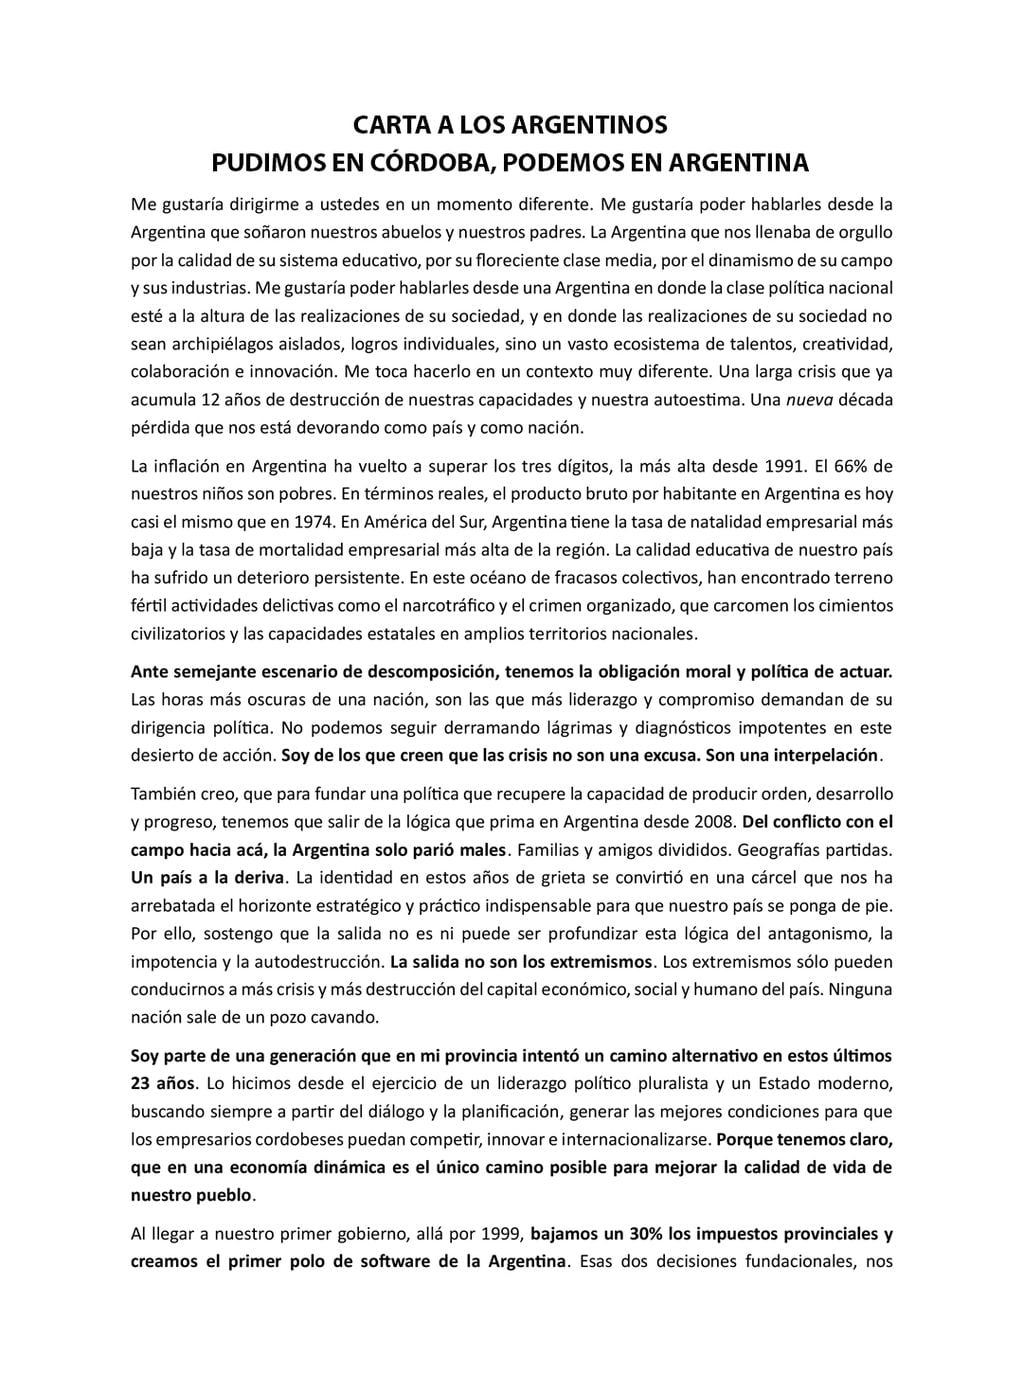 La carta de Juan Schiaretti para los argentinos.